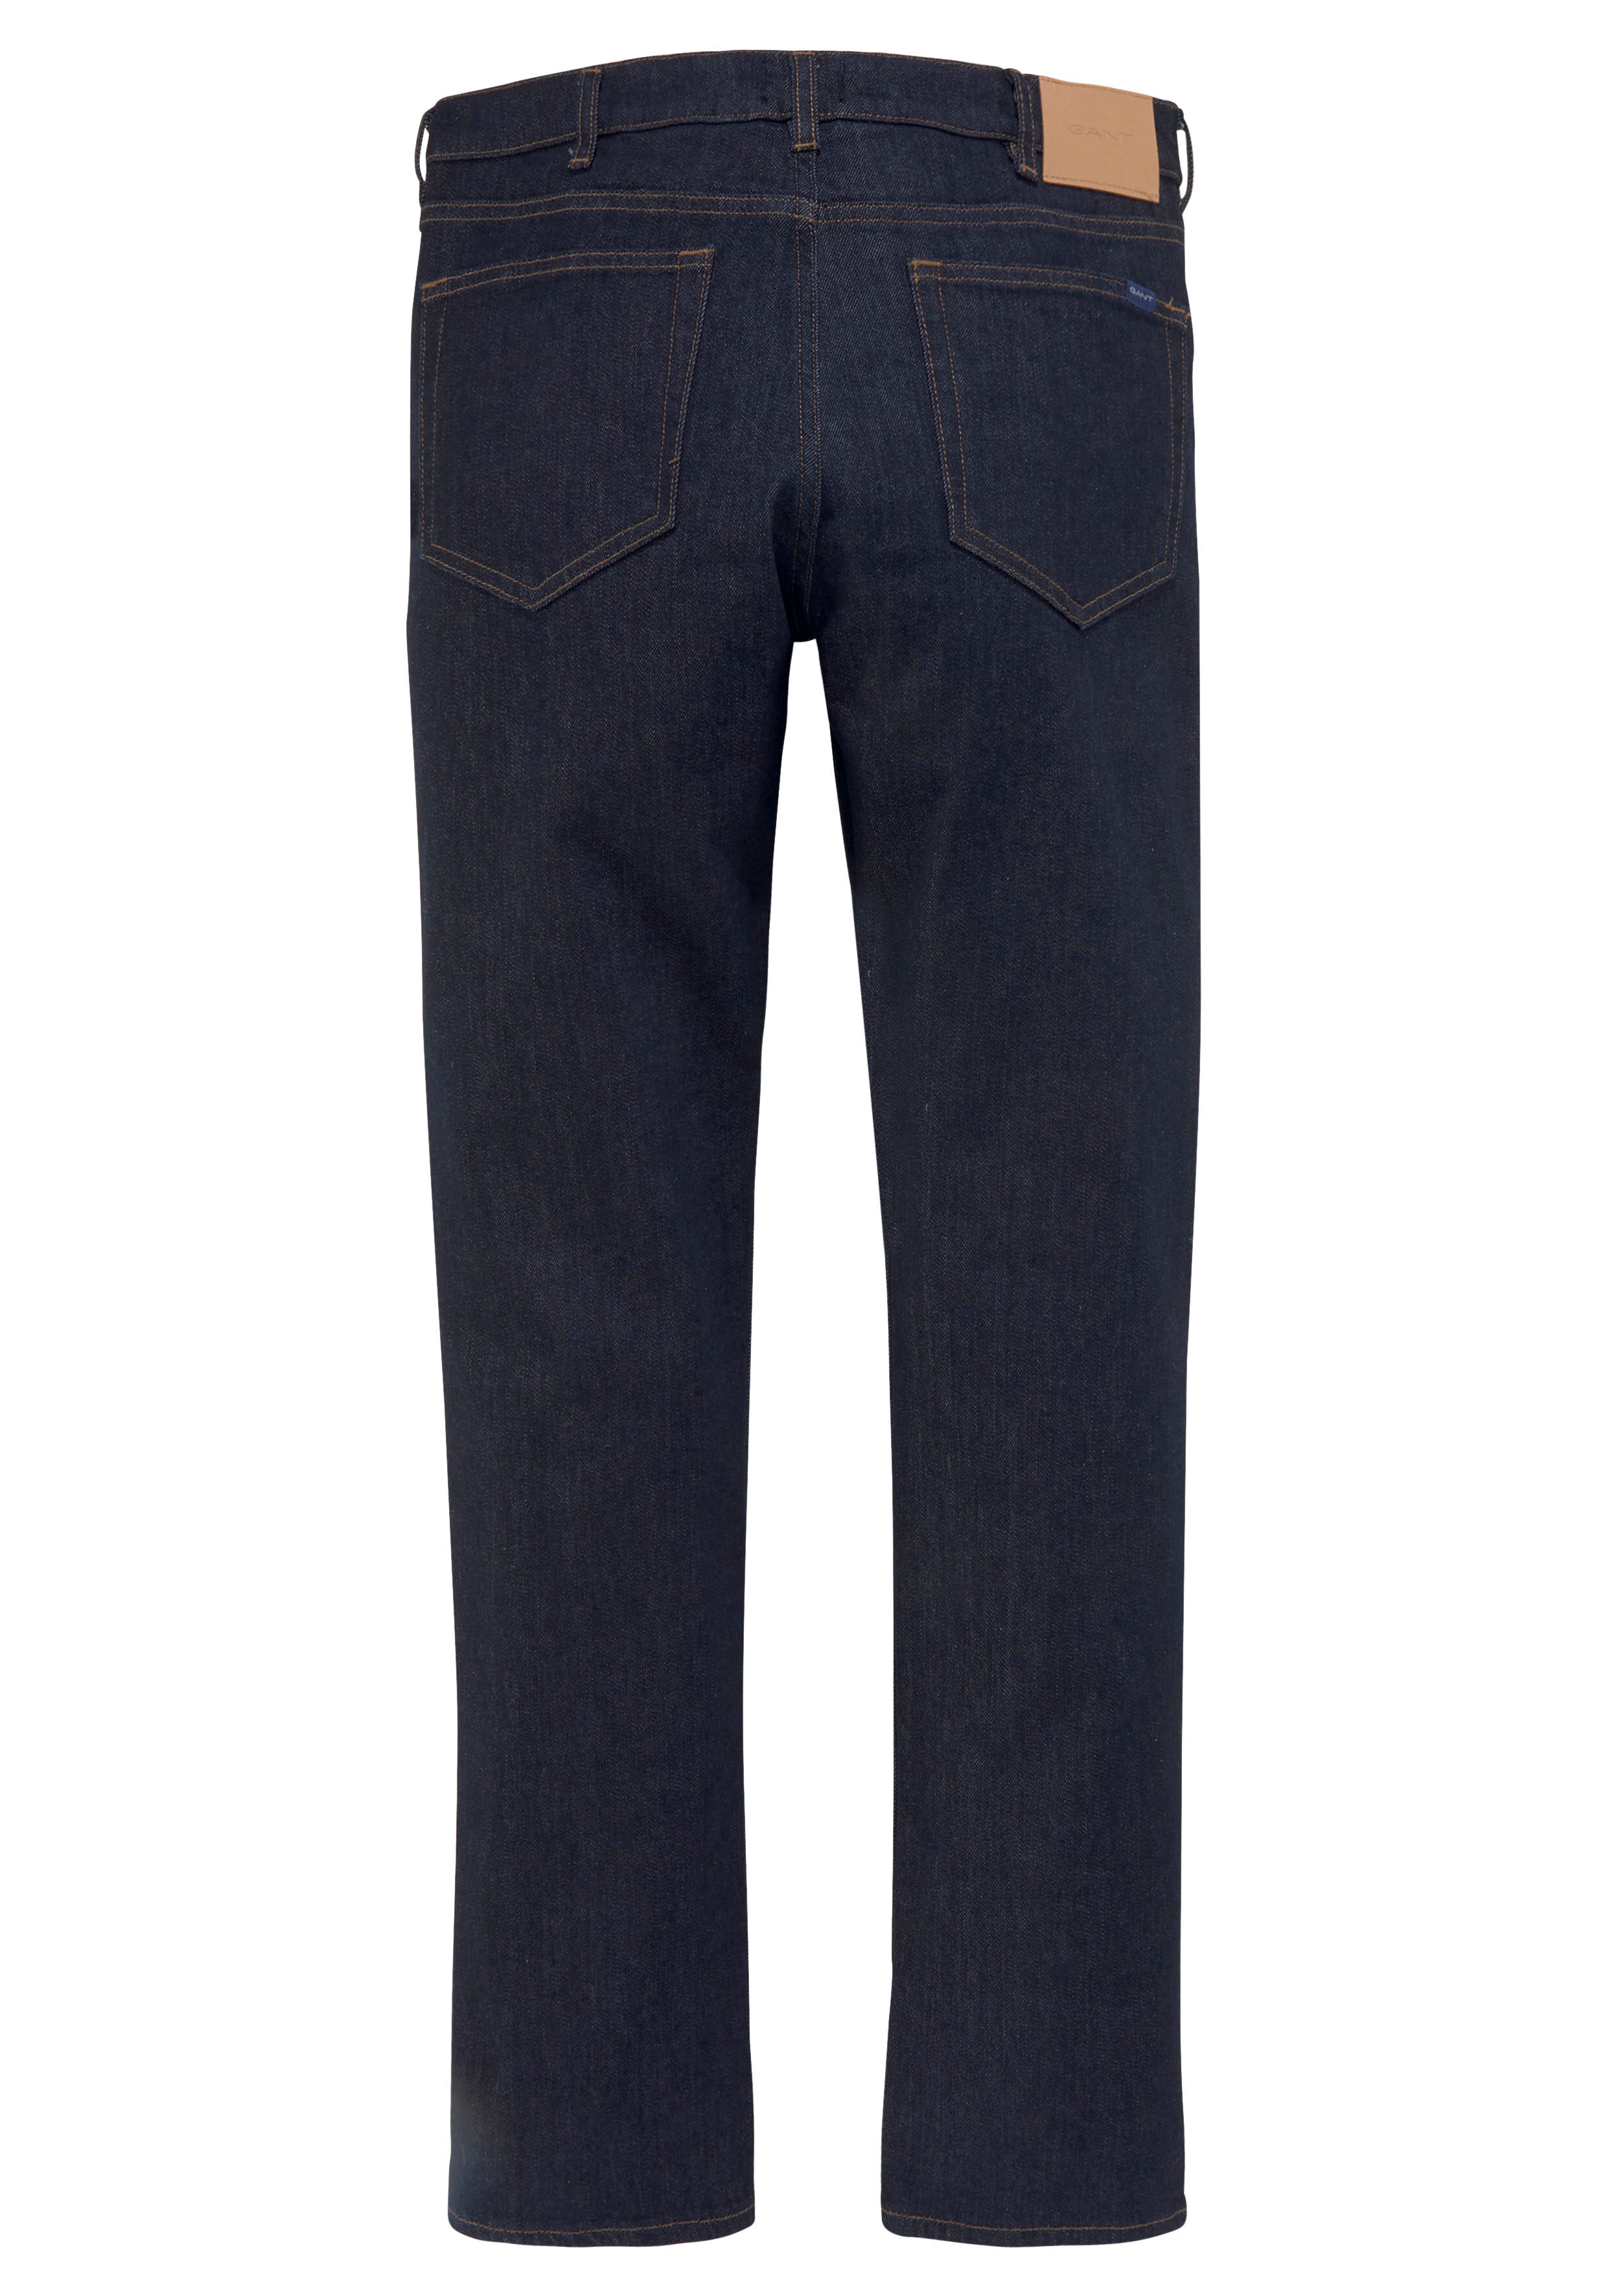 Gant 5-Pocket-Jeans »Arley« blau  30 31 32 33 34 36 38 40